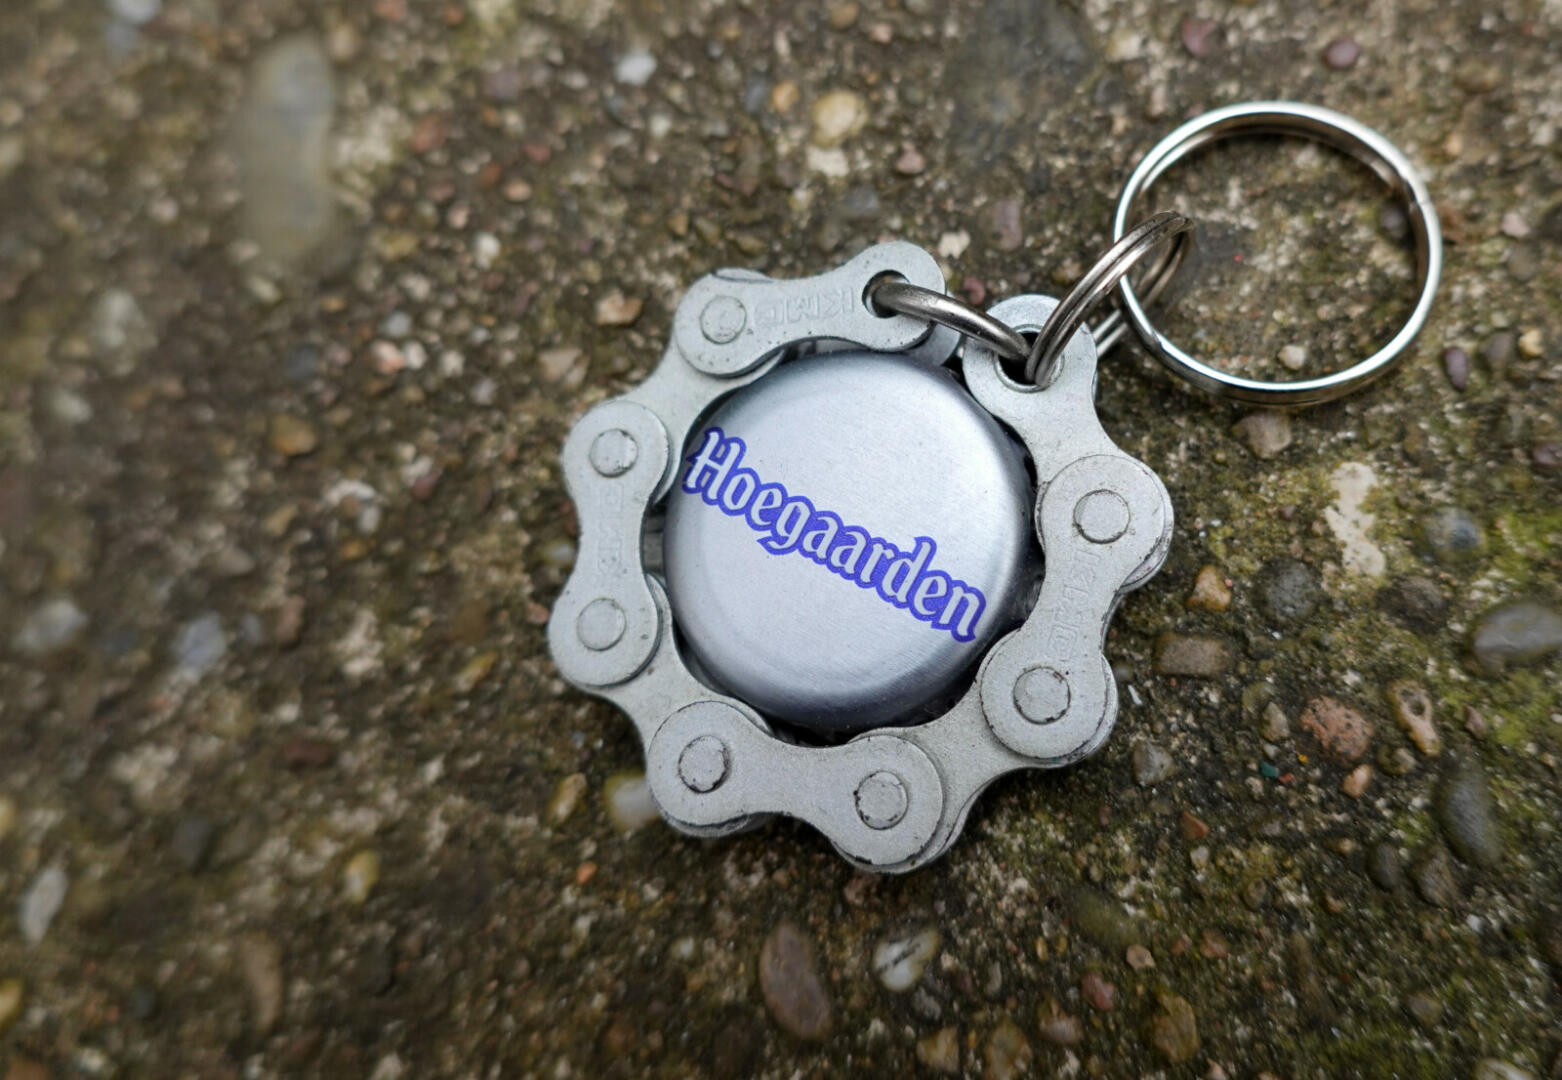 Porte-clés chaîne + capsule Hoogarden